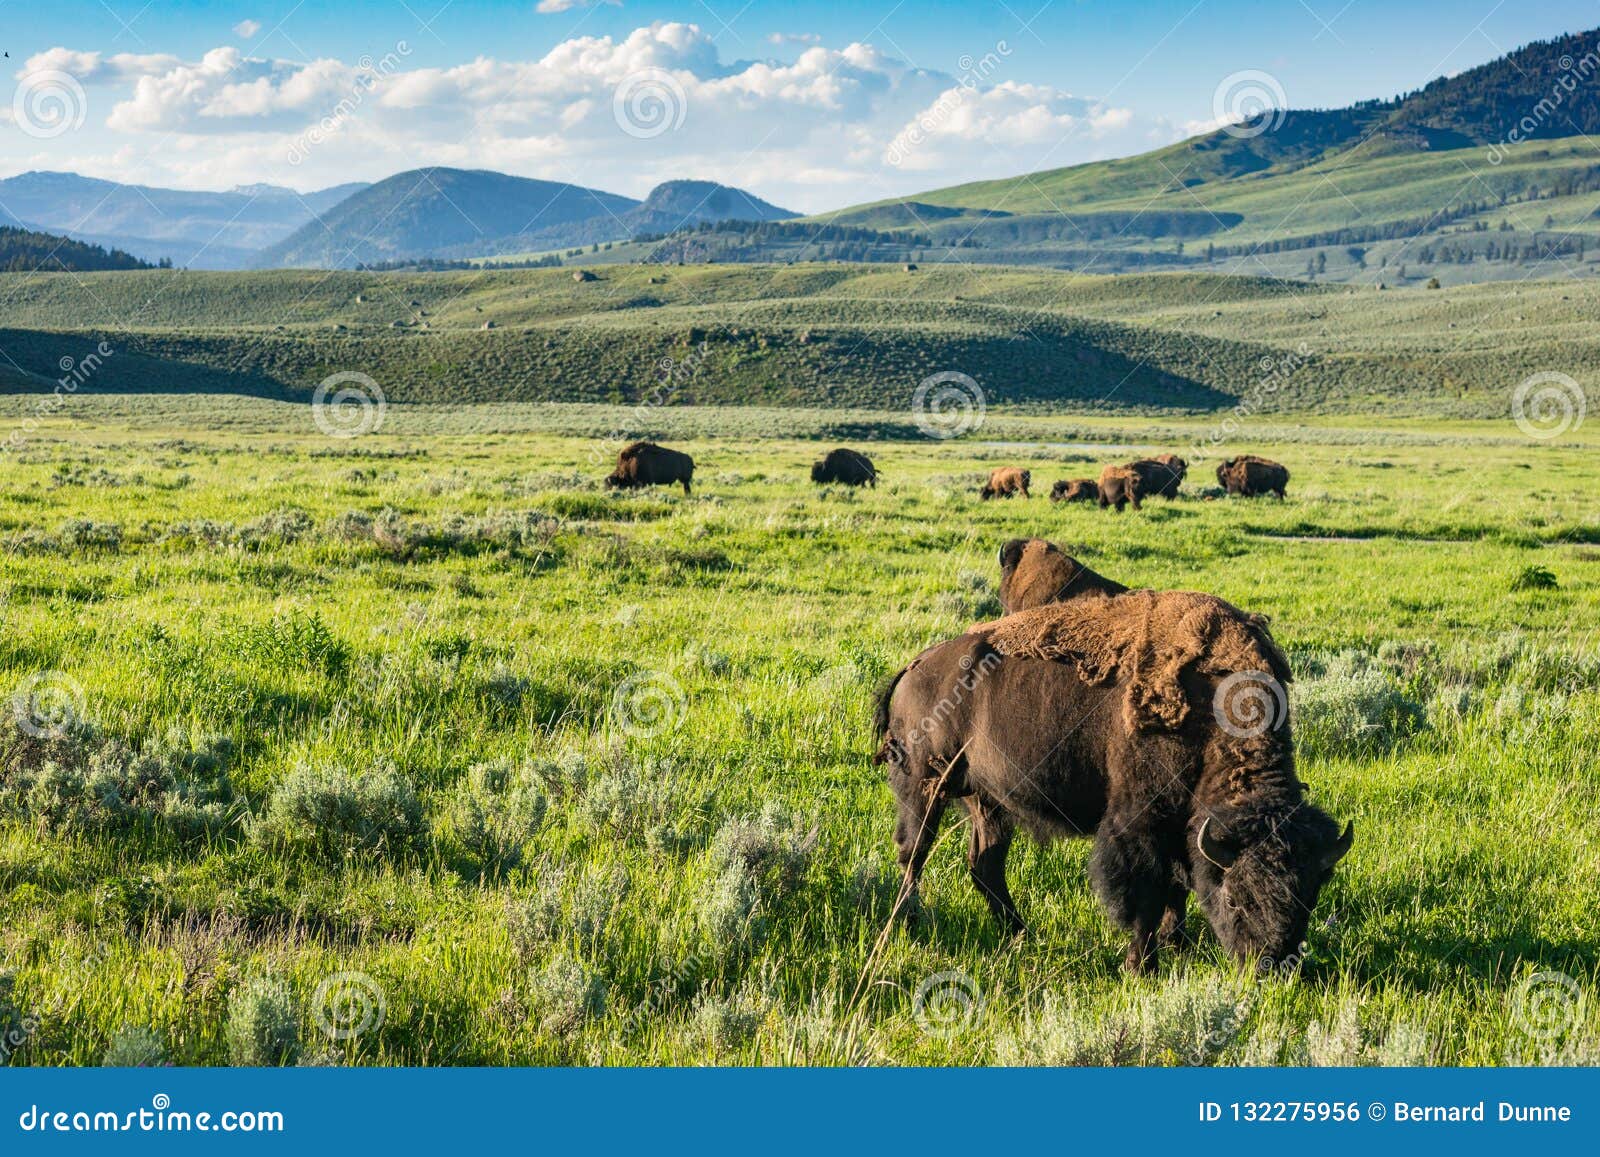 yellowstone national park buffalo, wyoming